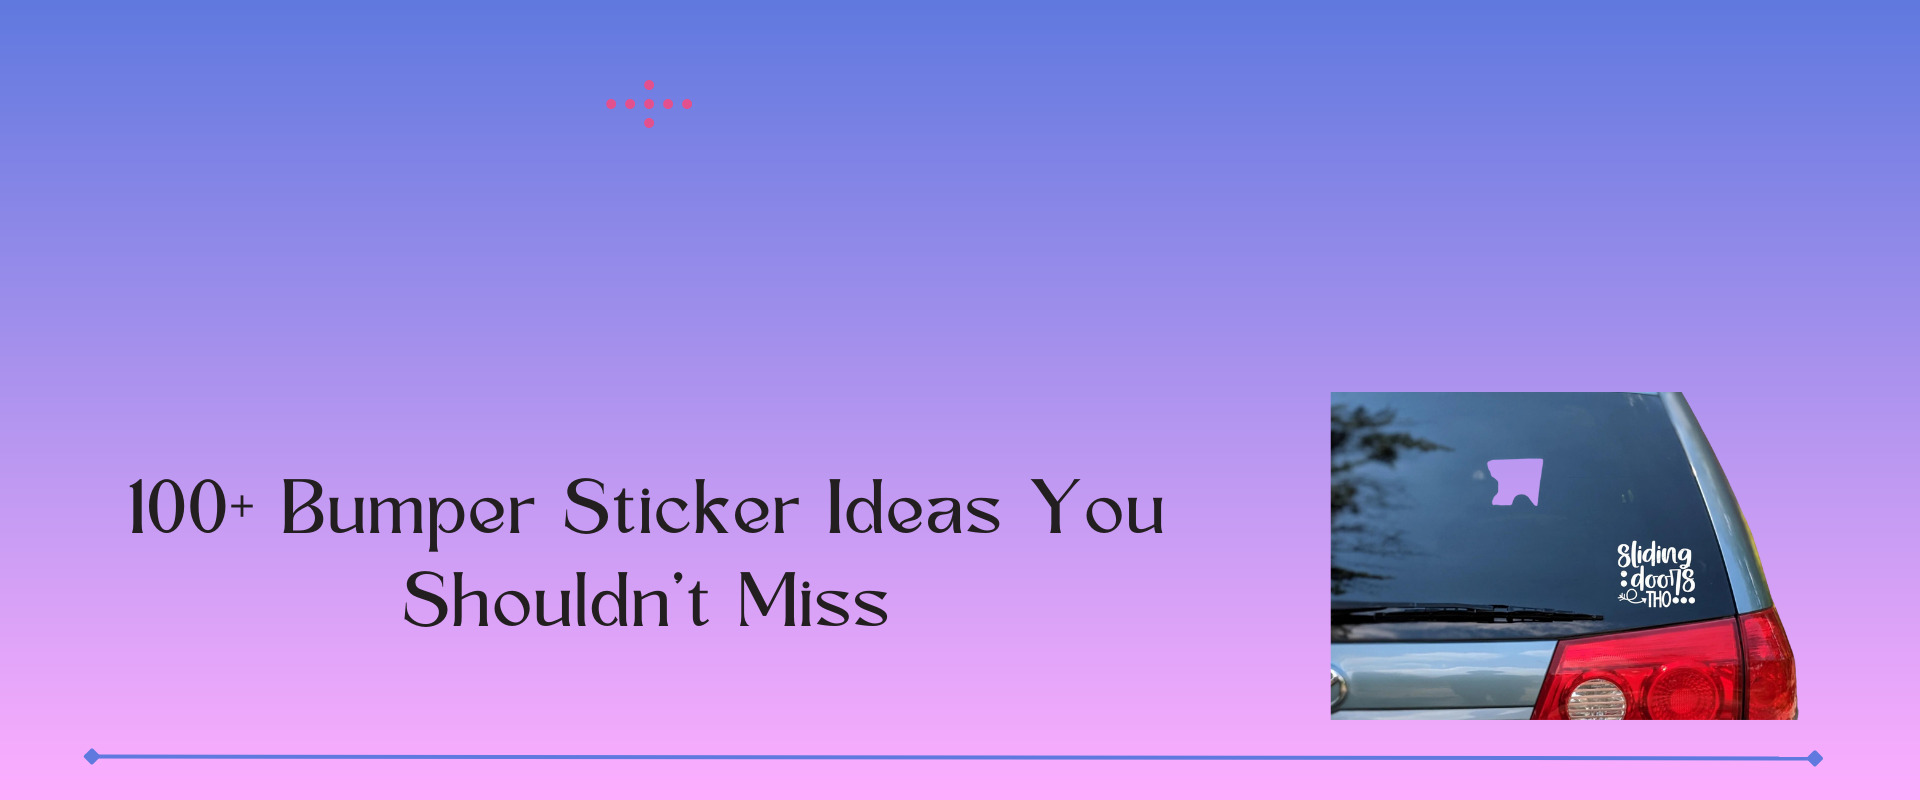 bumper sticker ideas